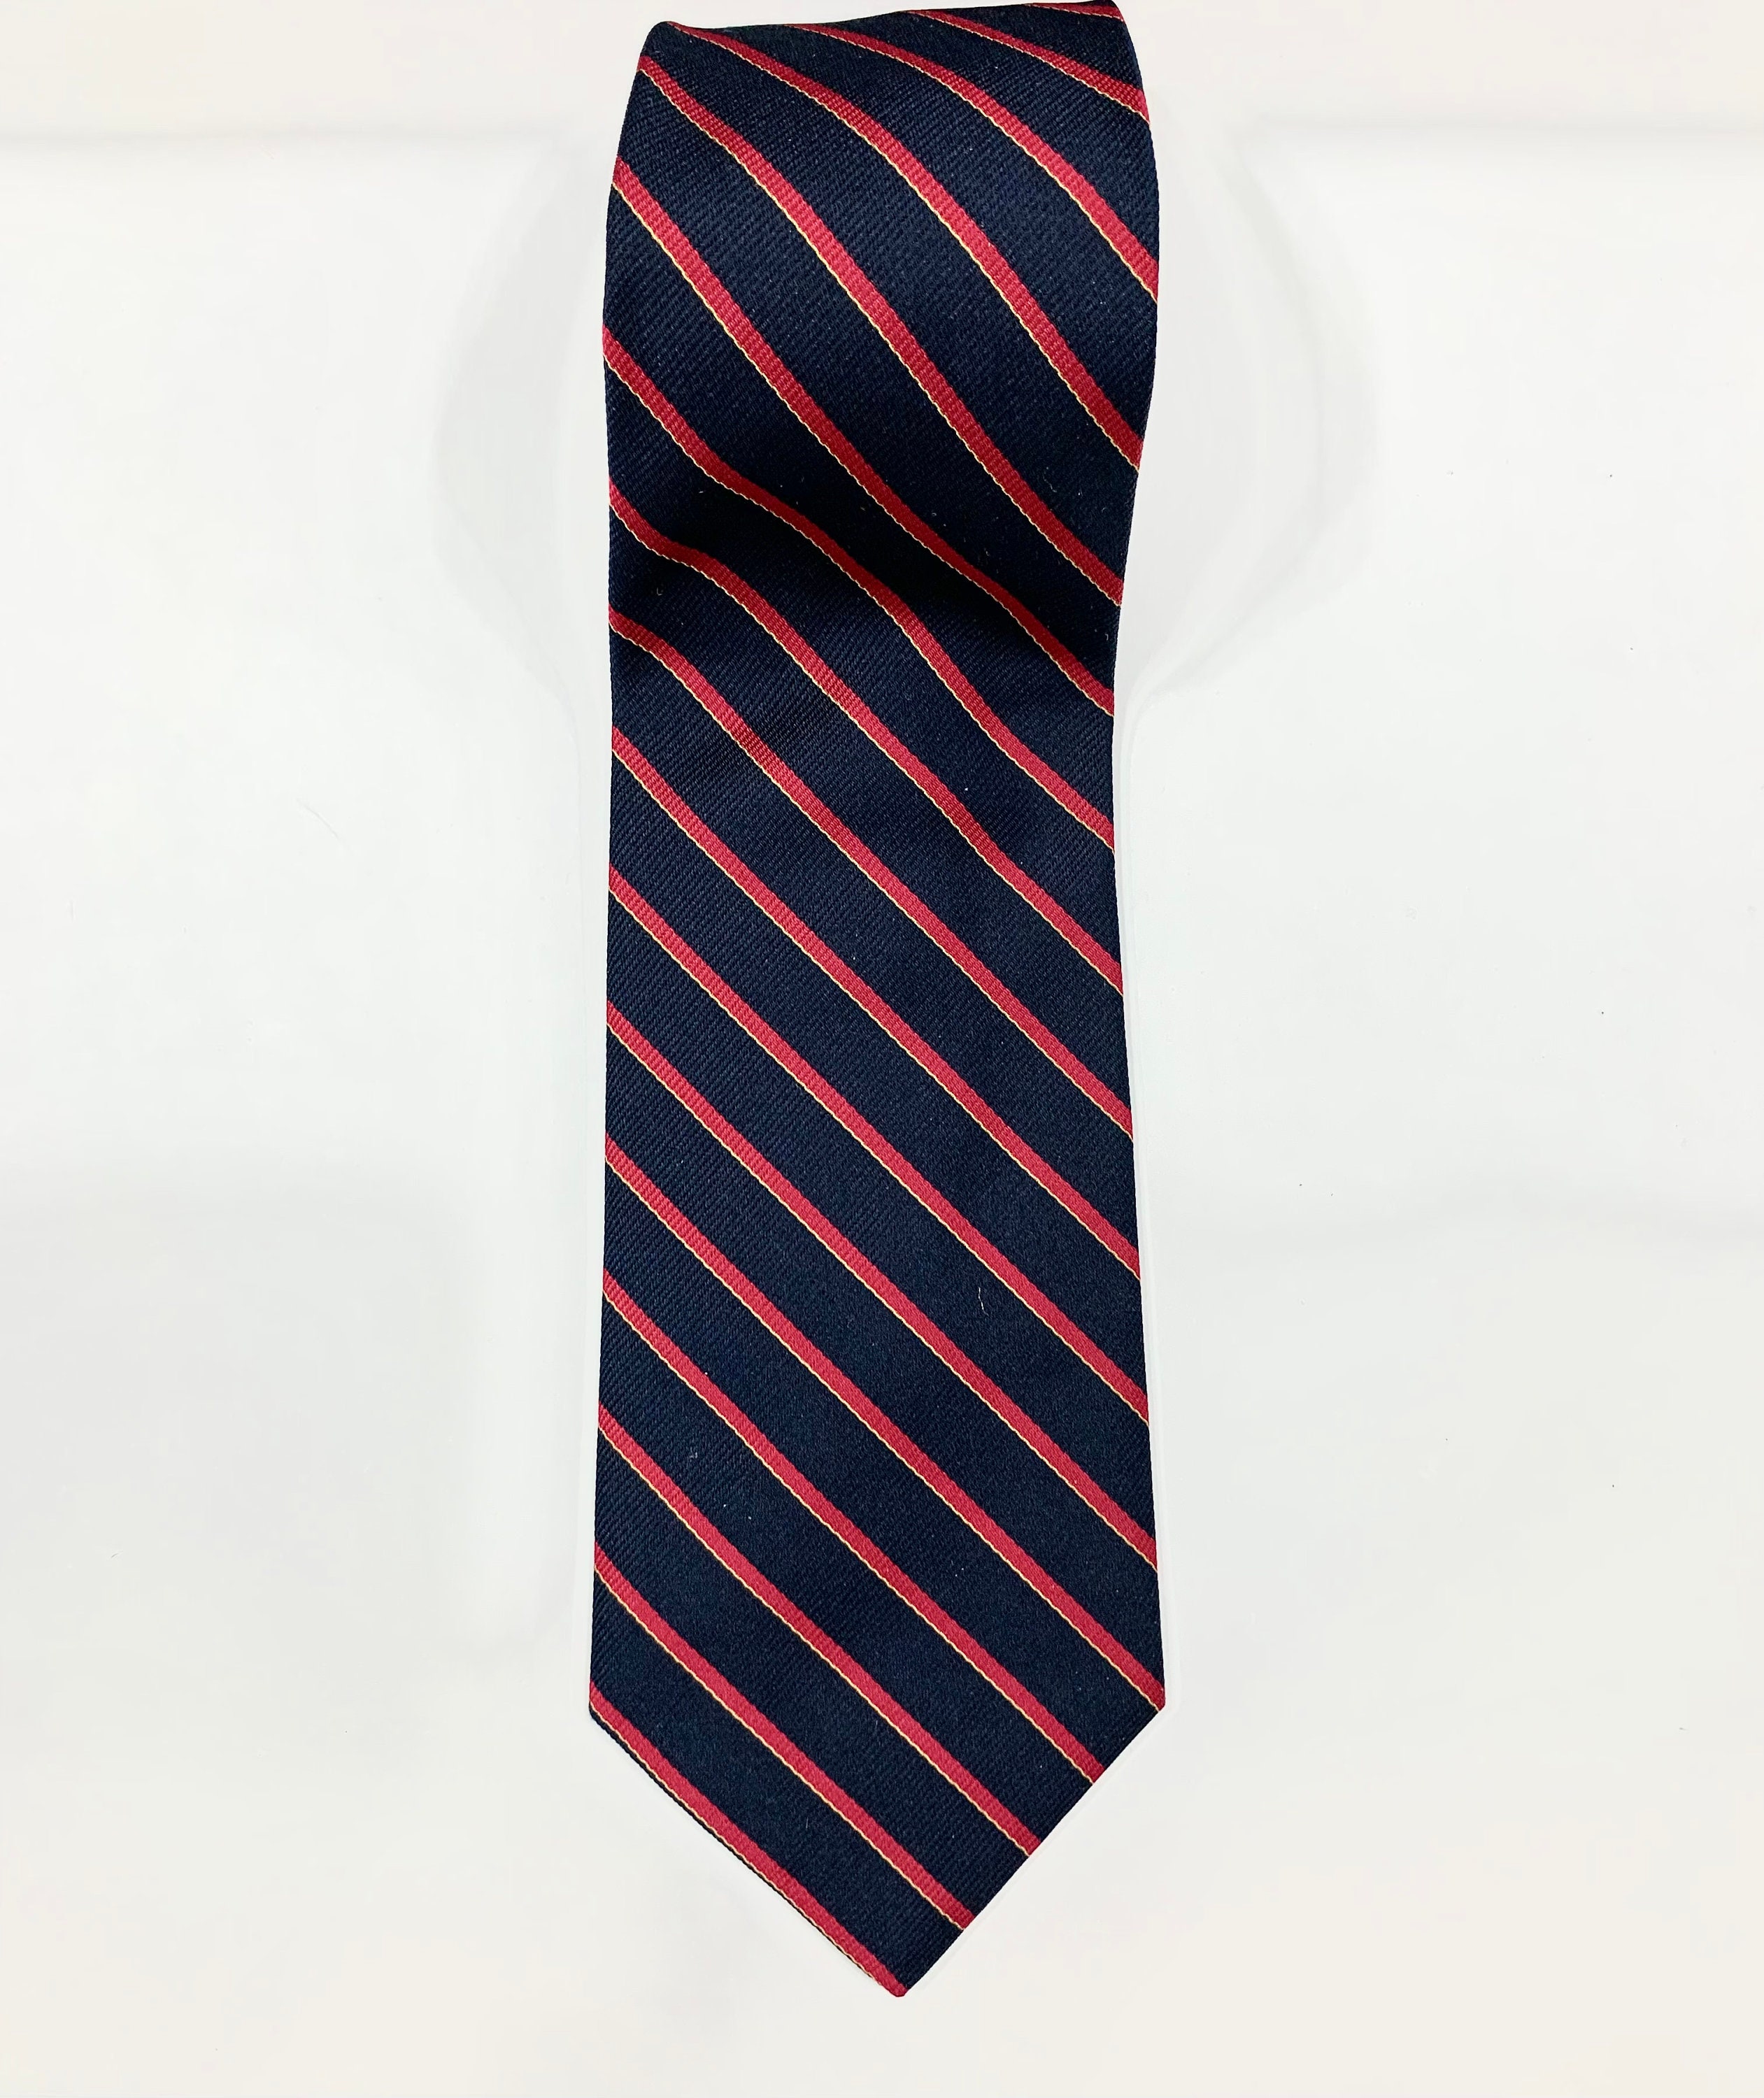 Navy Blue & Red Regimental Striped Tie Brooks Brothers Silk | Etsy